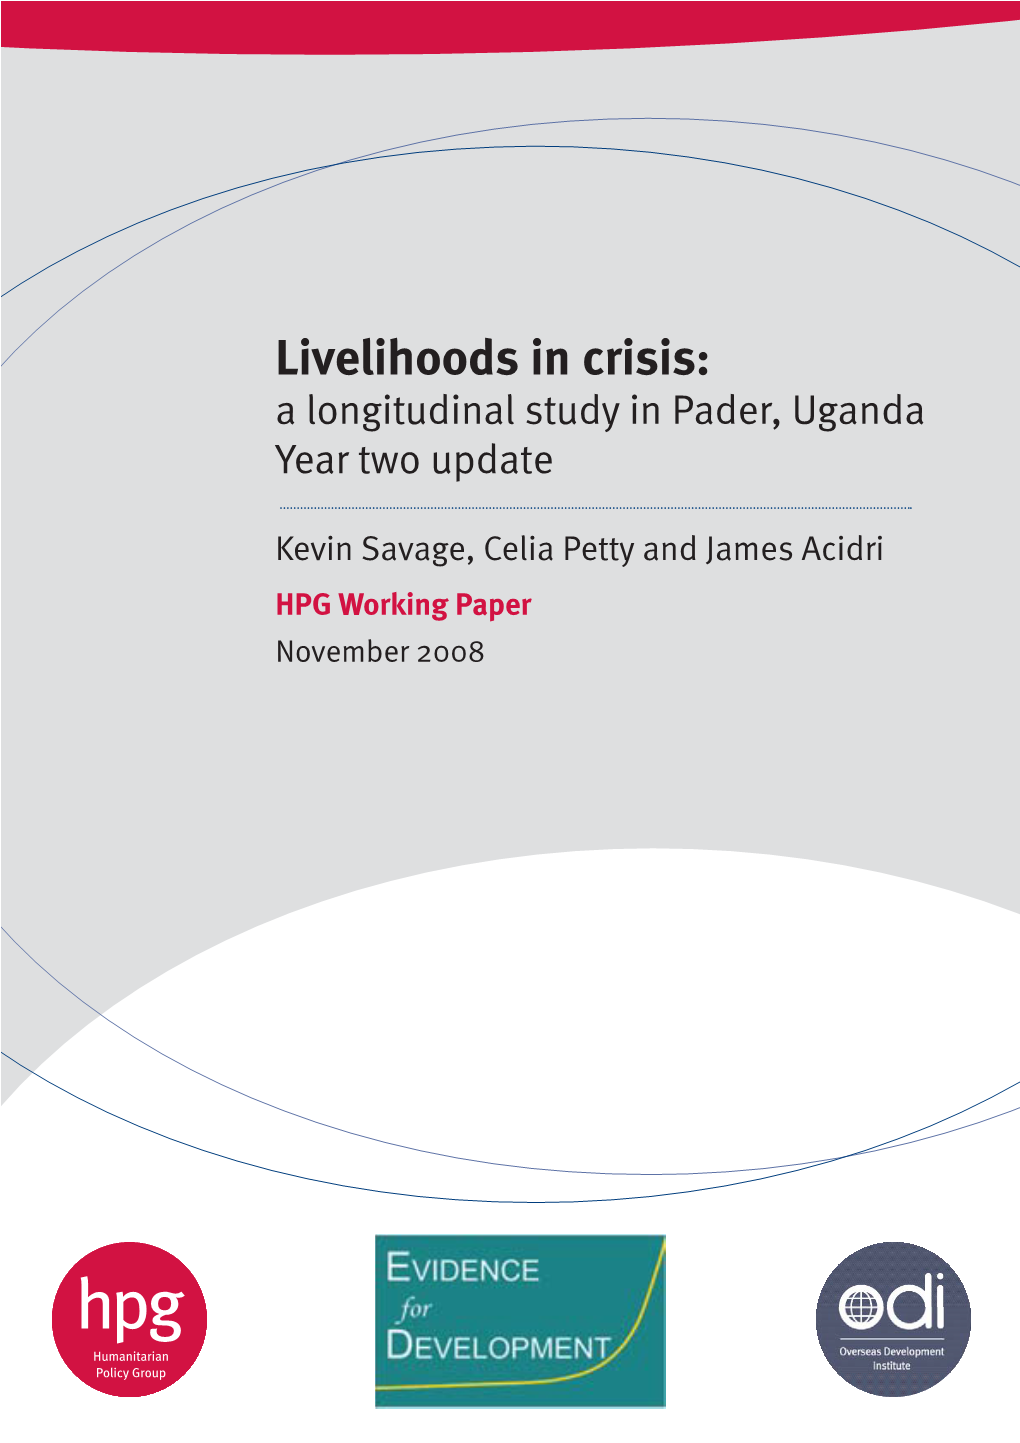 Livelihoods in Crisis: a Longitudinal Study in Pader, Uganda Year Two Update